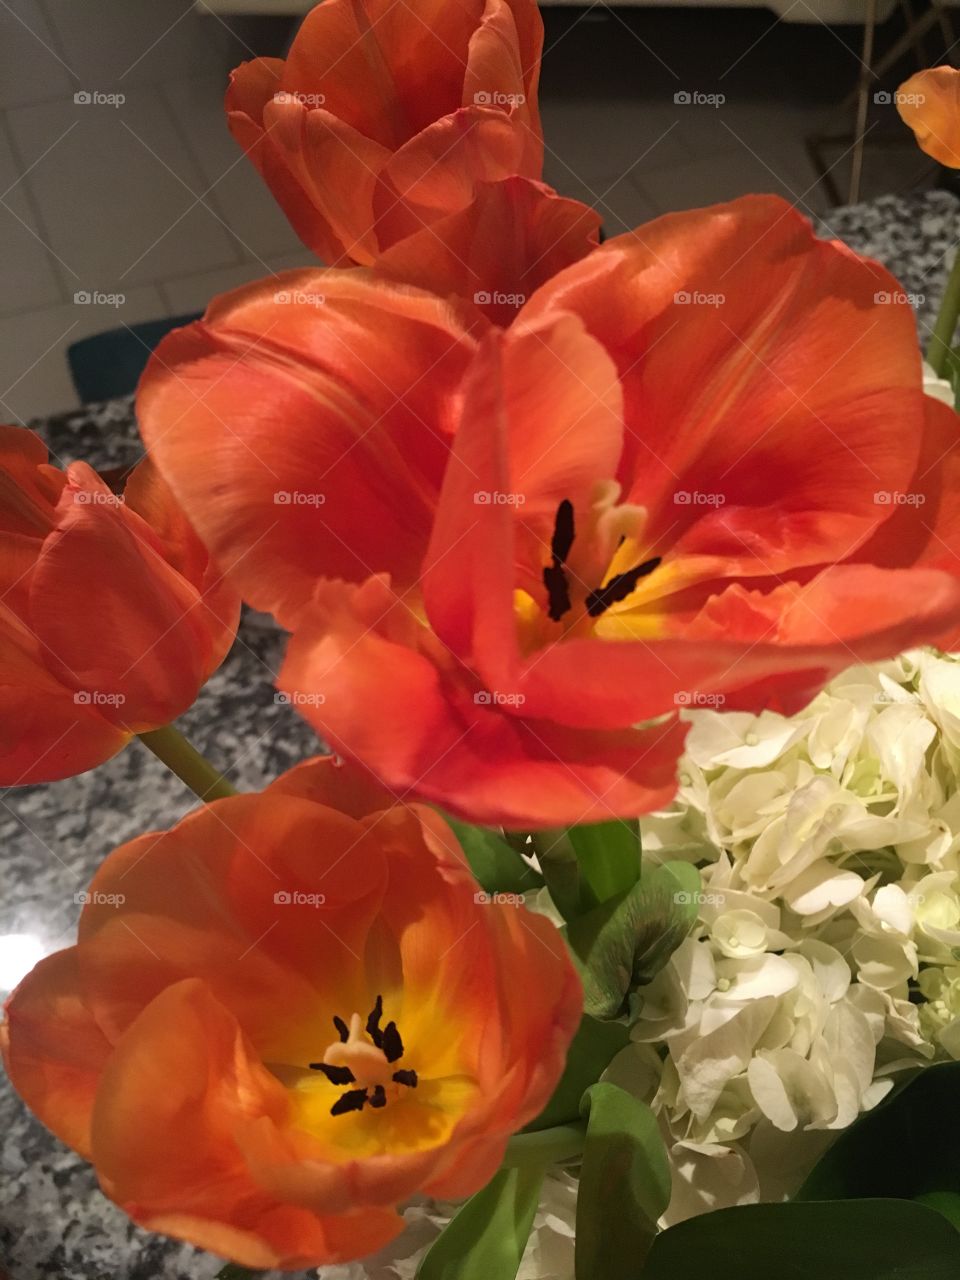 Tulips are beautiful 